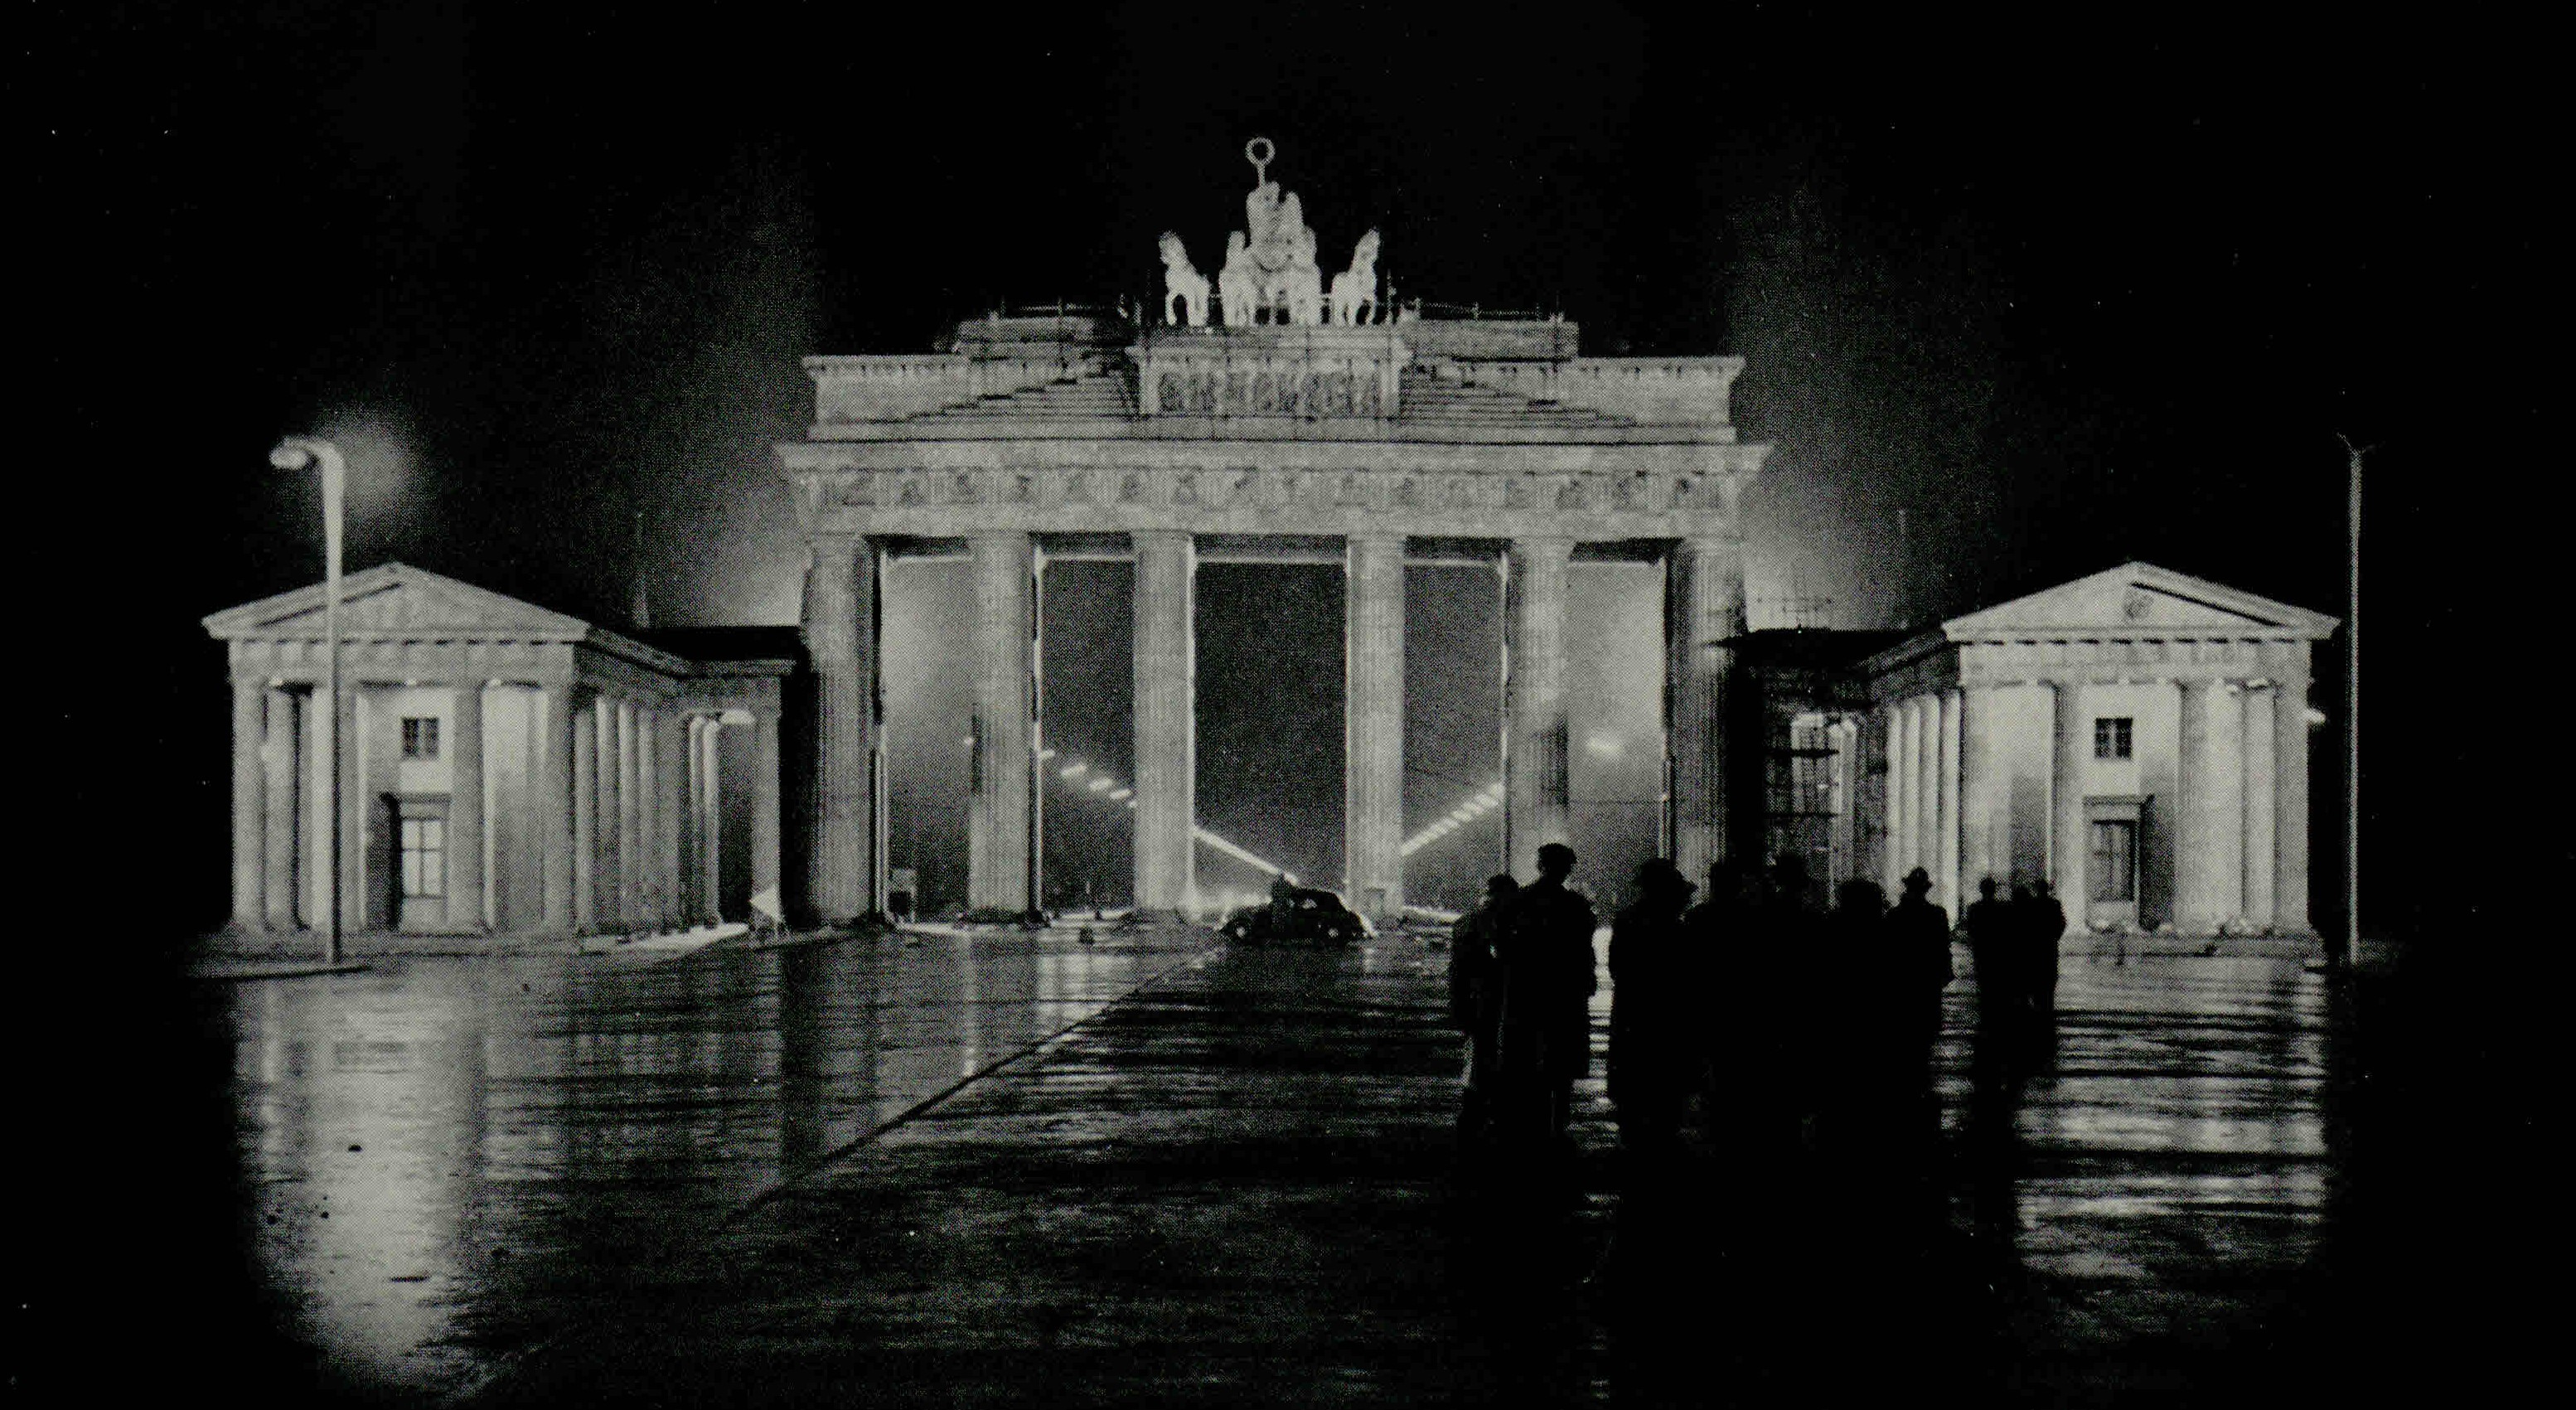 Brandenburg Gate, Berlin, during the 1950s